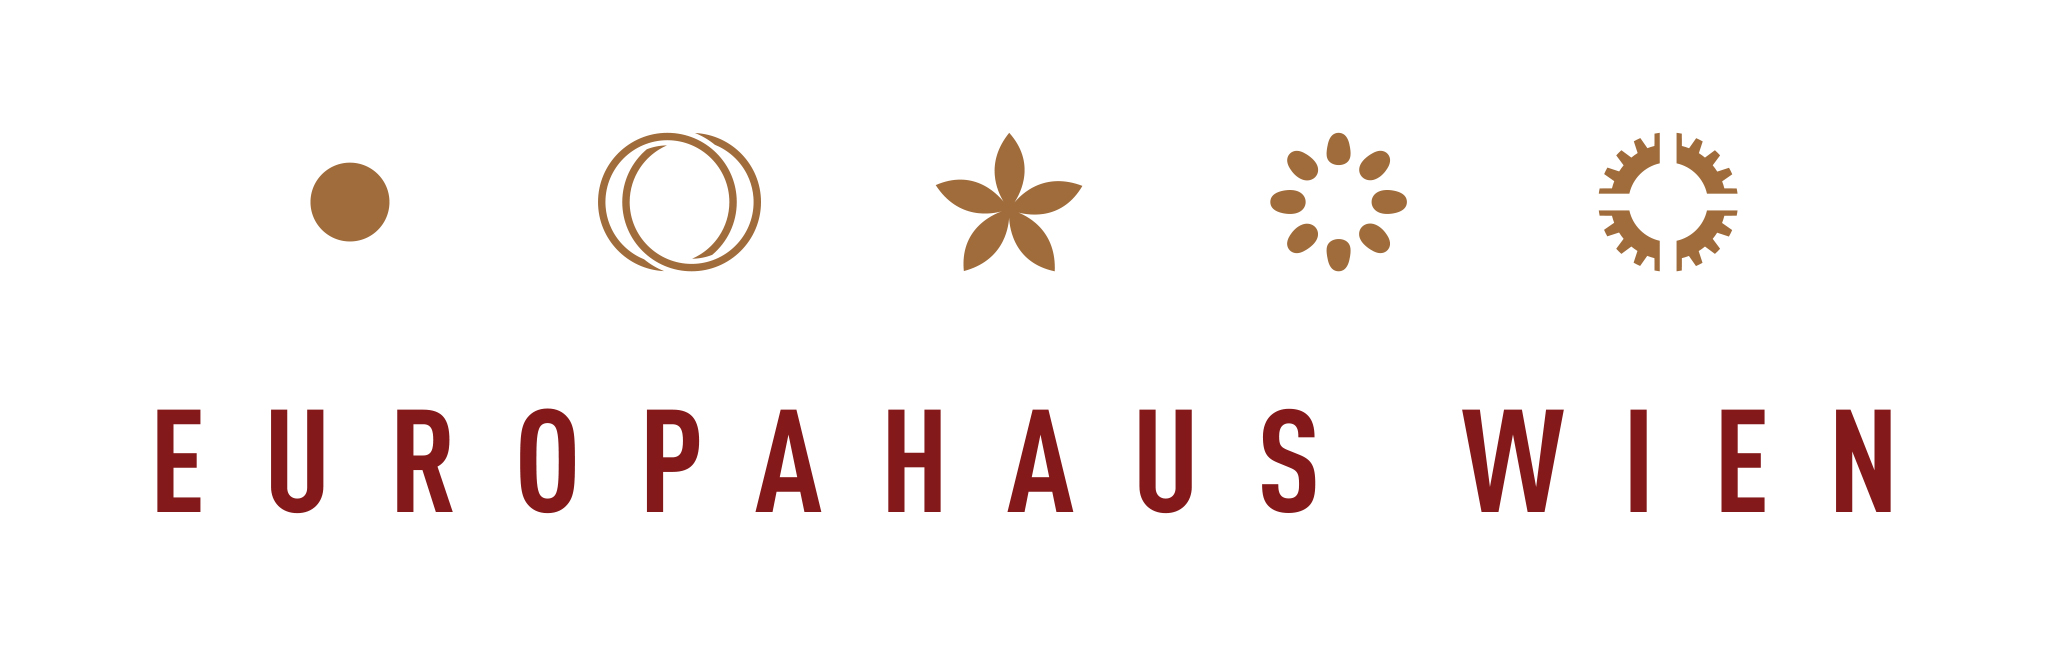 EUROPAHAUS-WIEN-Logo-Large-SchuZo-72